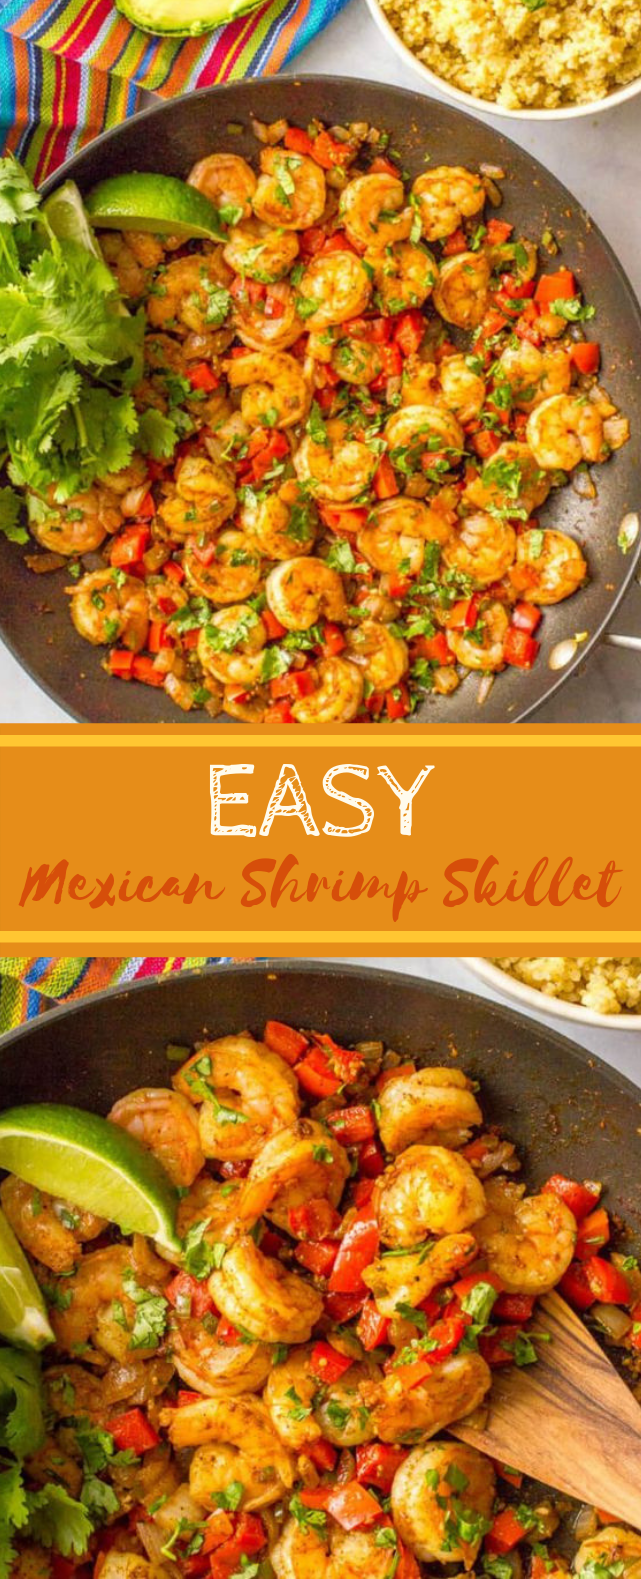 Easy Mexican shrimp skillet #glutenfree #paleo 